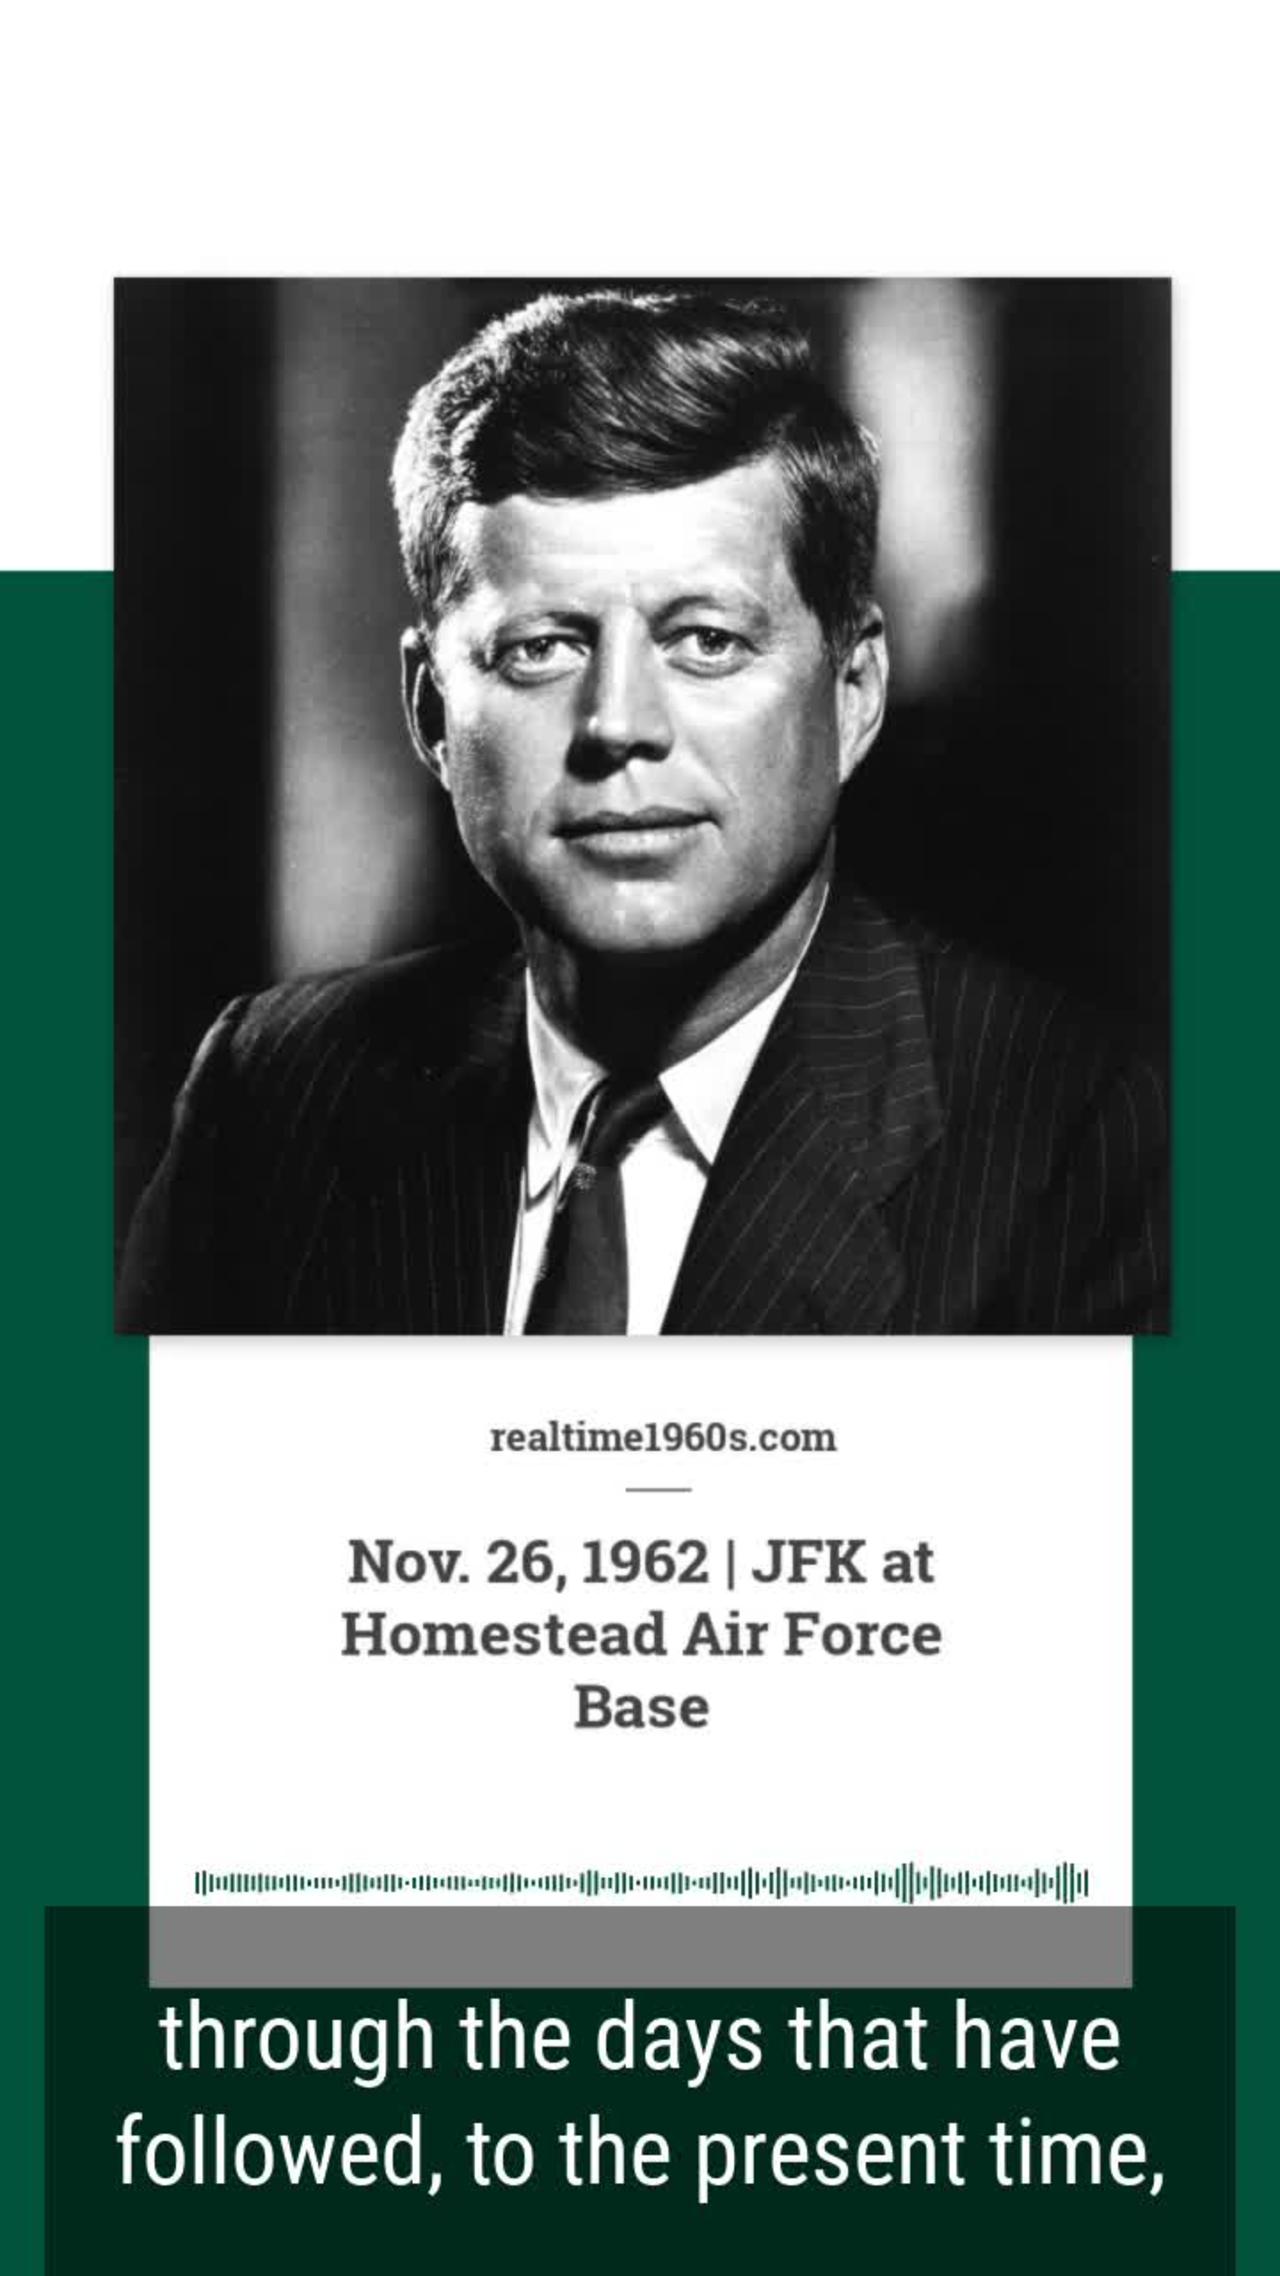 Nov. 26, 1962 - JFK at Homestead Air Force Base